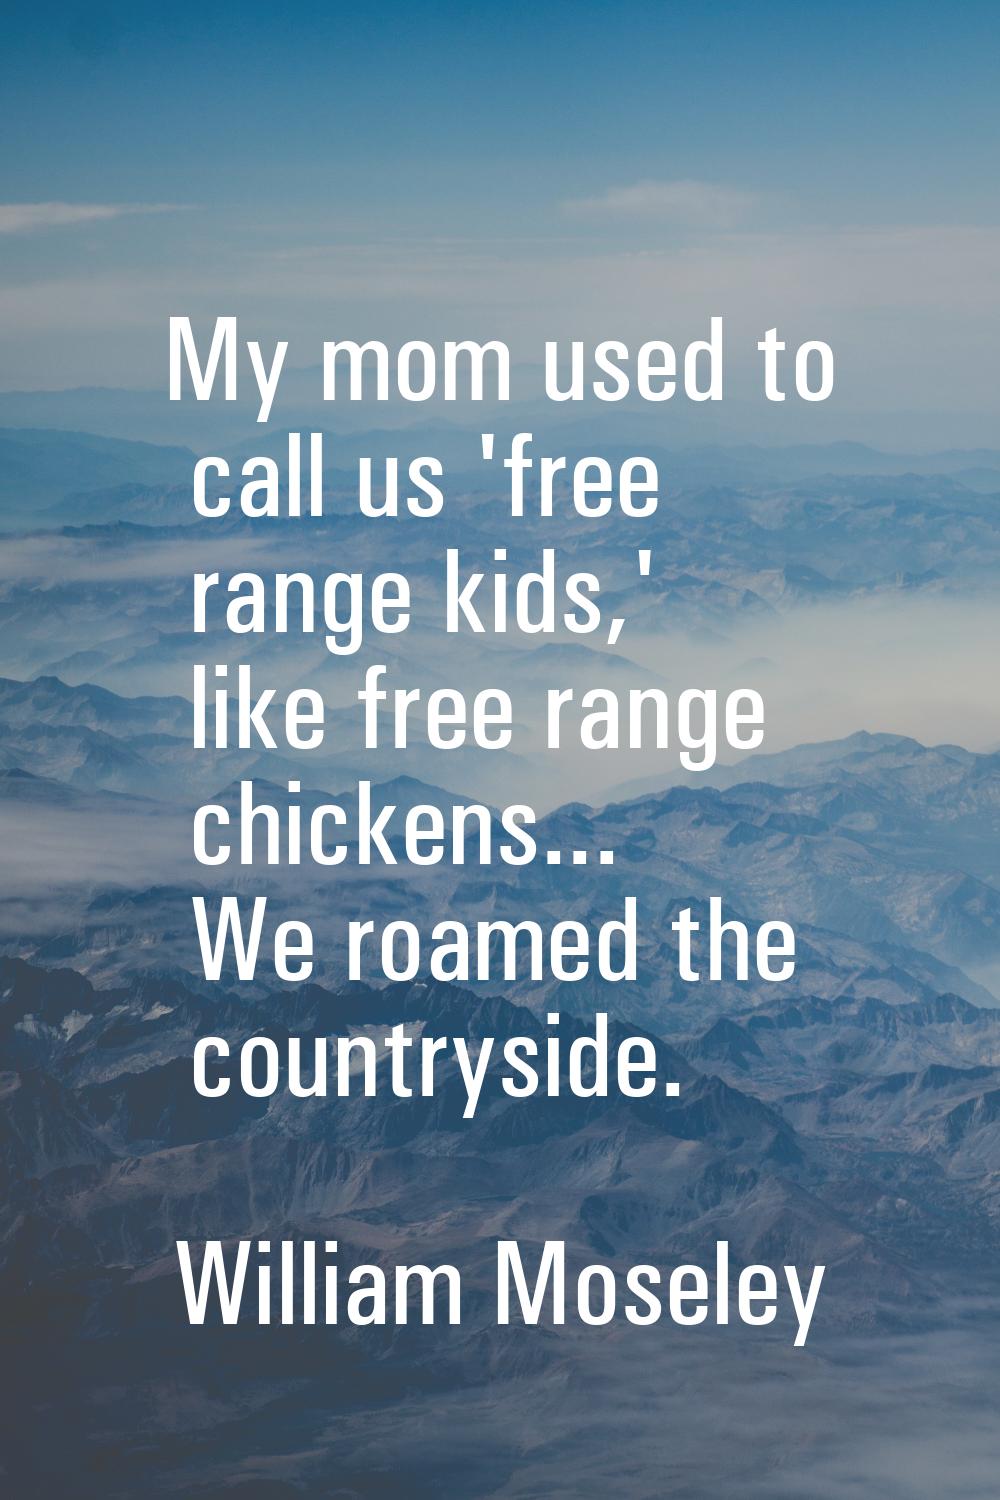 My mom used to call us 'free range kids,' like free range chickens... We roamed the countryside.